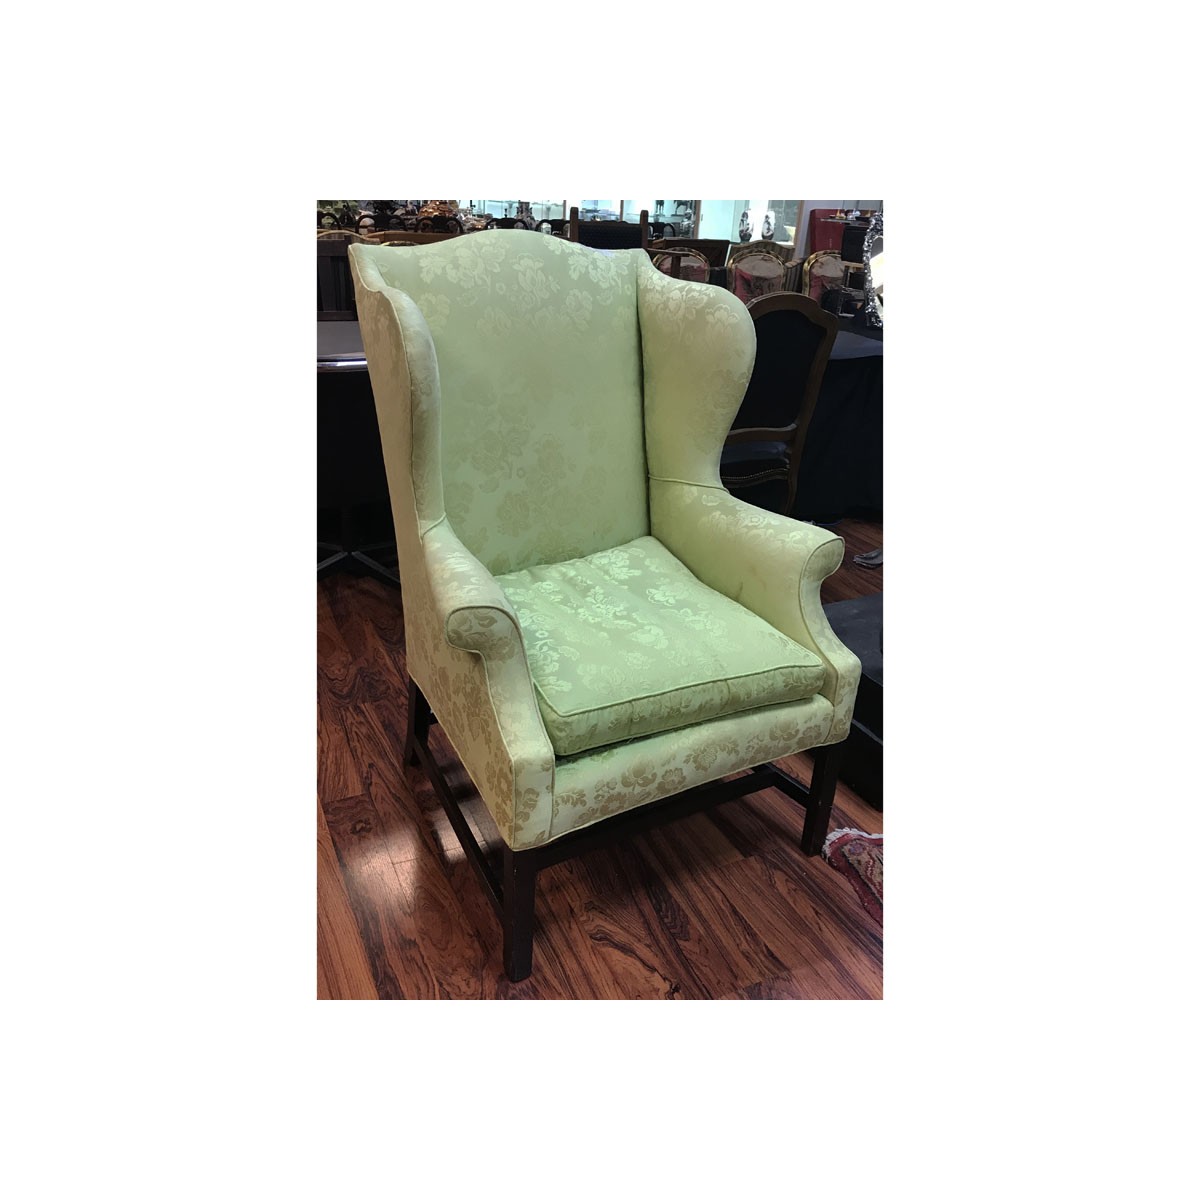 19th C. Sheraton Style Wingback Chair